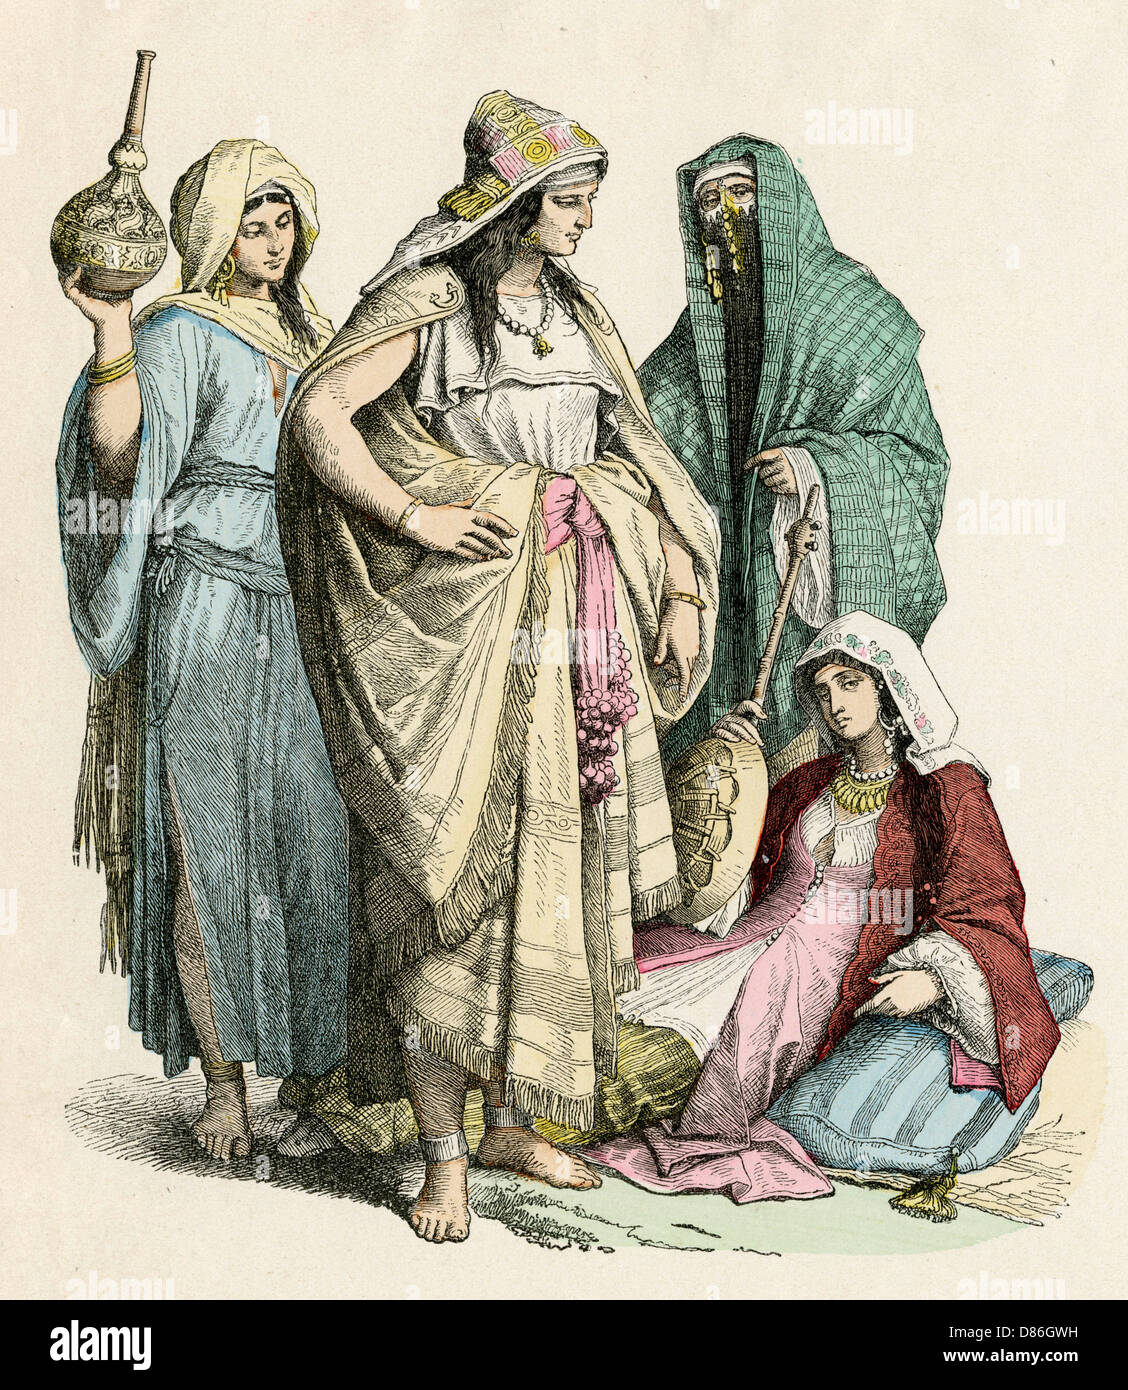 Racial - Arabs - Women - 19th century Stock Photo